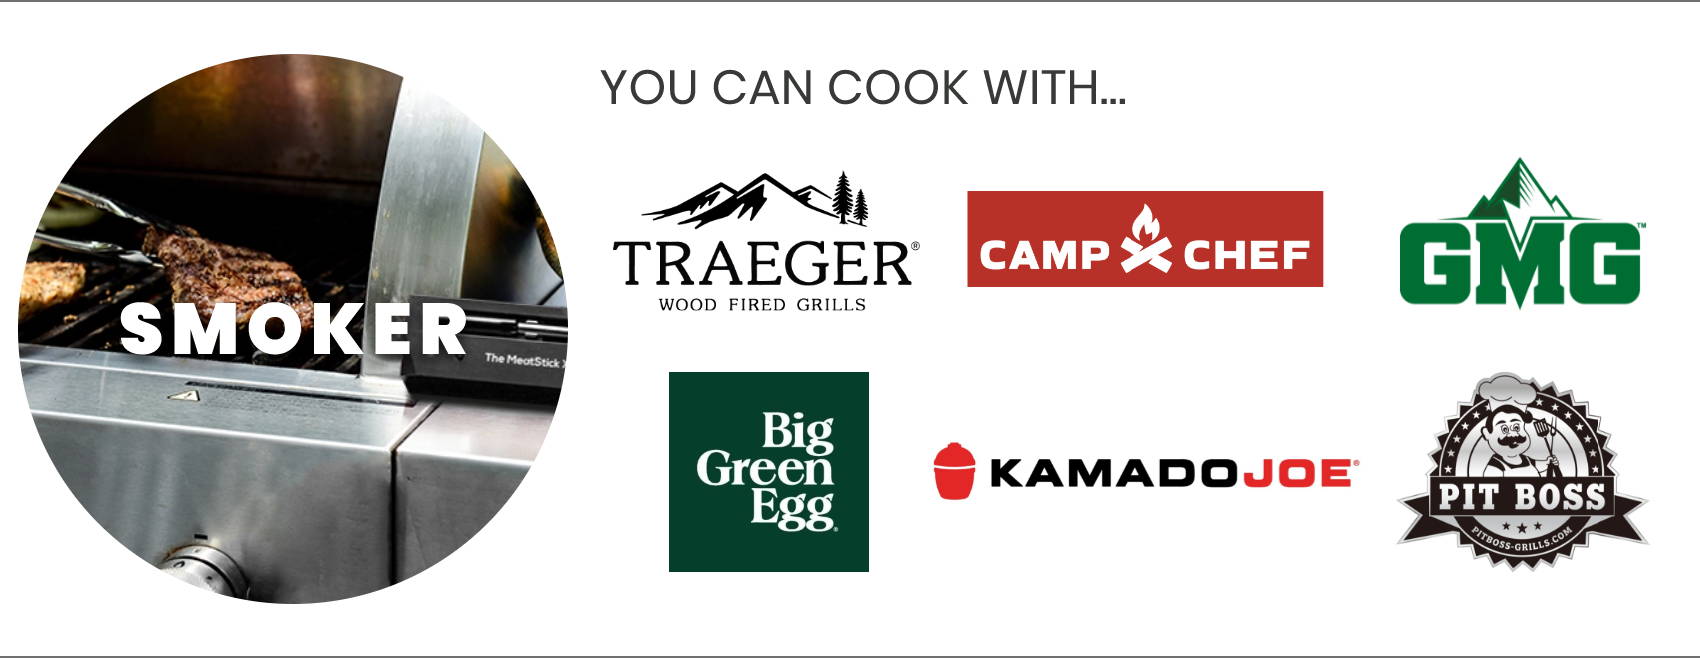 Traeger, Camp Chef, GMG Green Mountain Grills, BGE Big Green Egg, Kamado Joe, Pit Boss